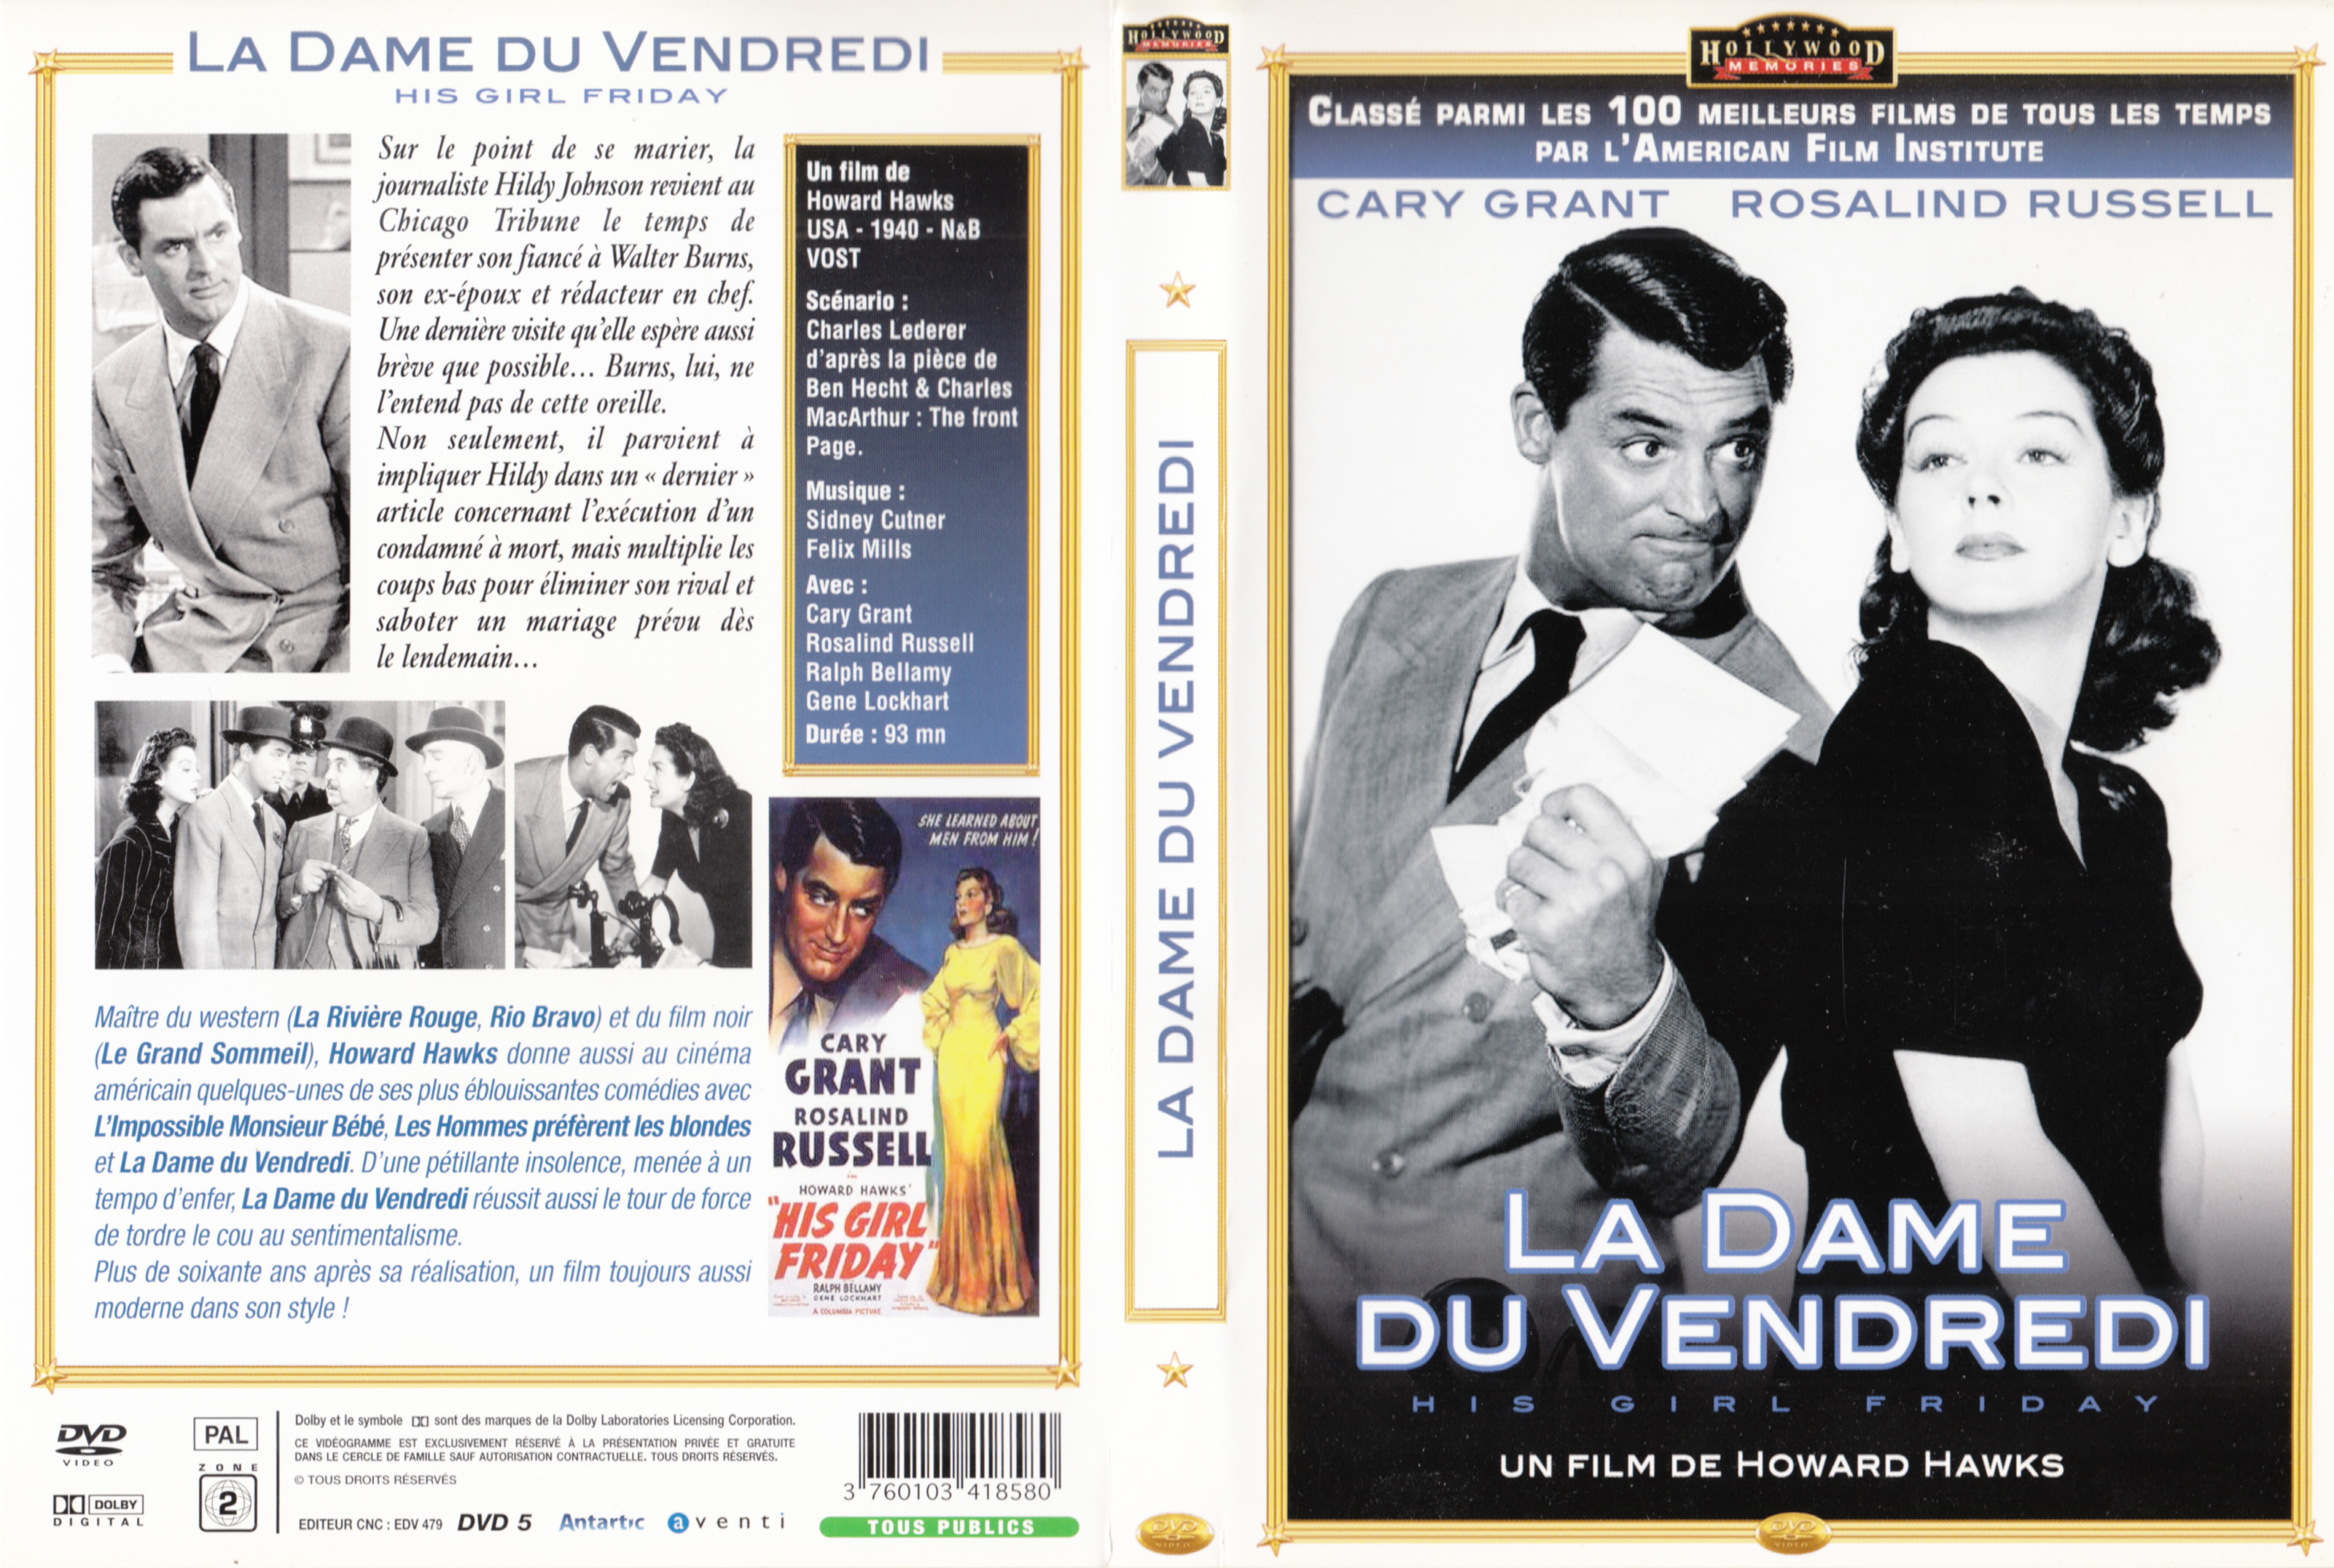 Jaquette DVD La dame du vendredi v2